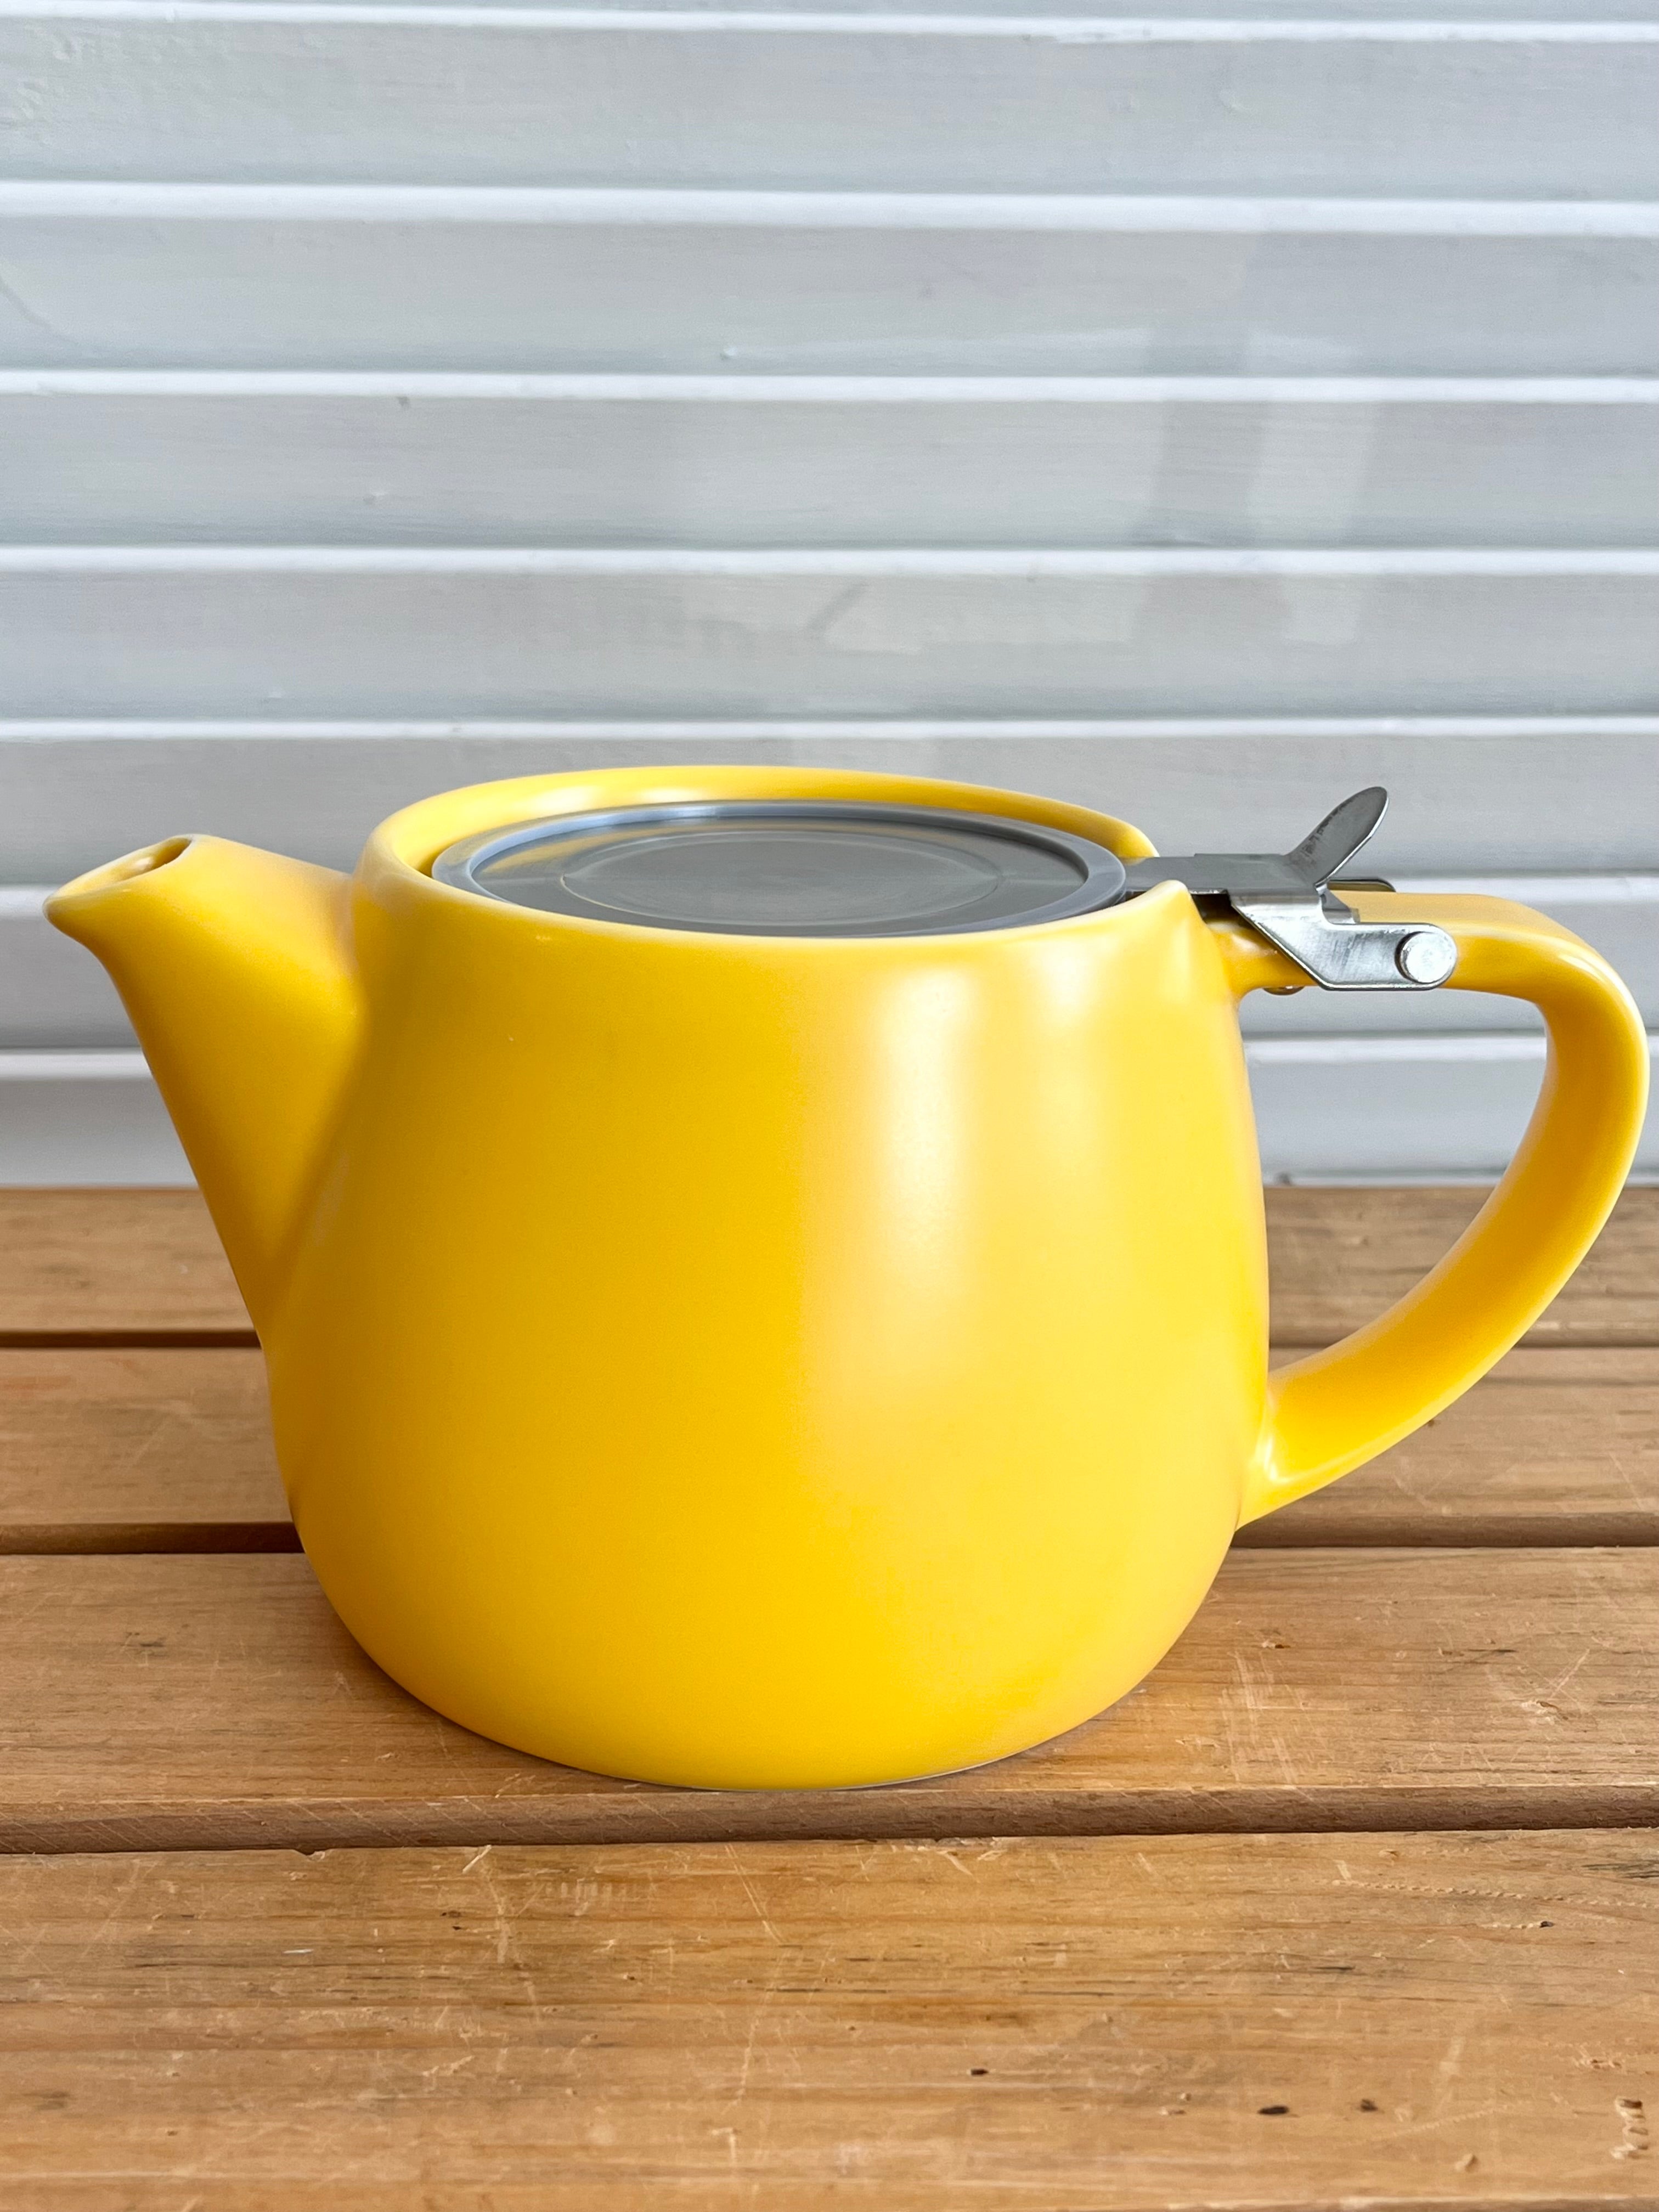 Ceramic Teapots from Tealyra